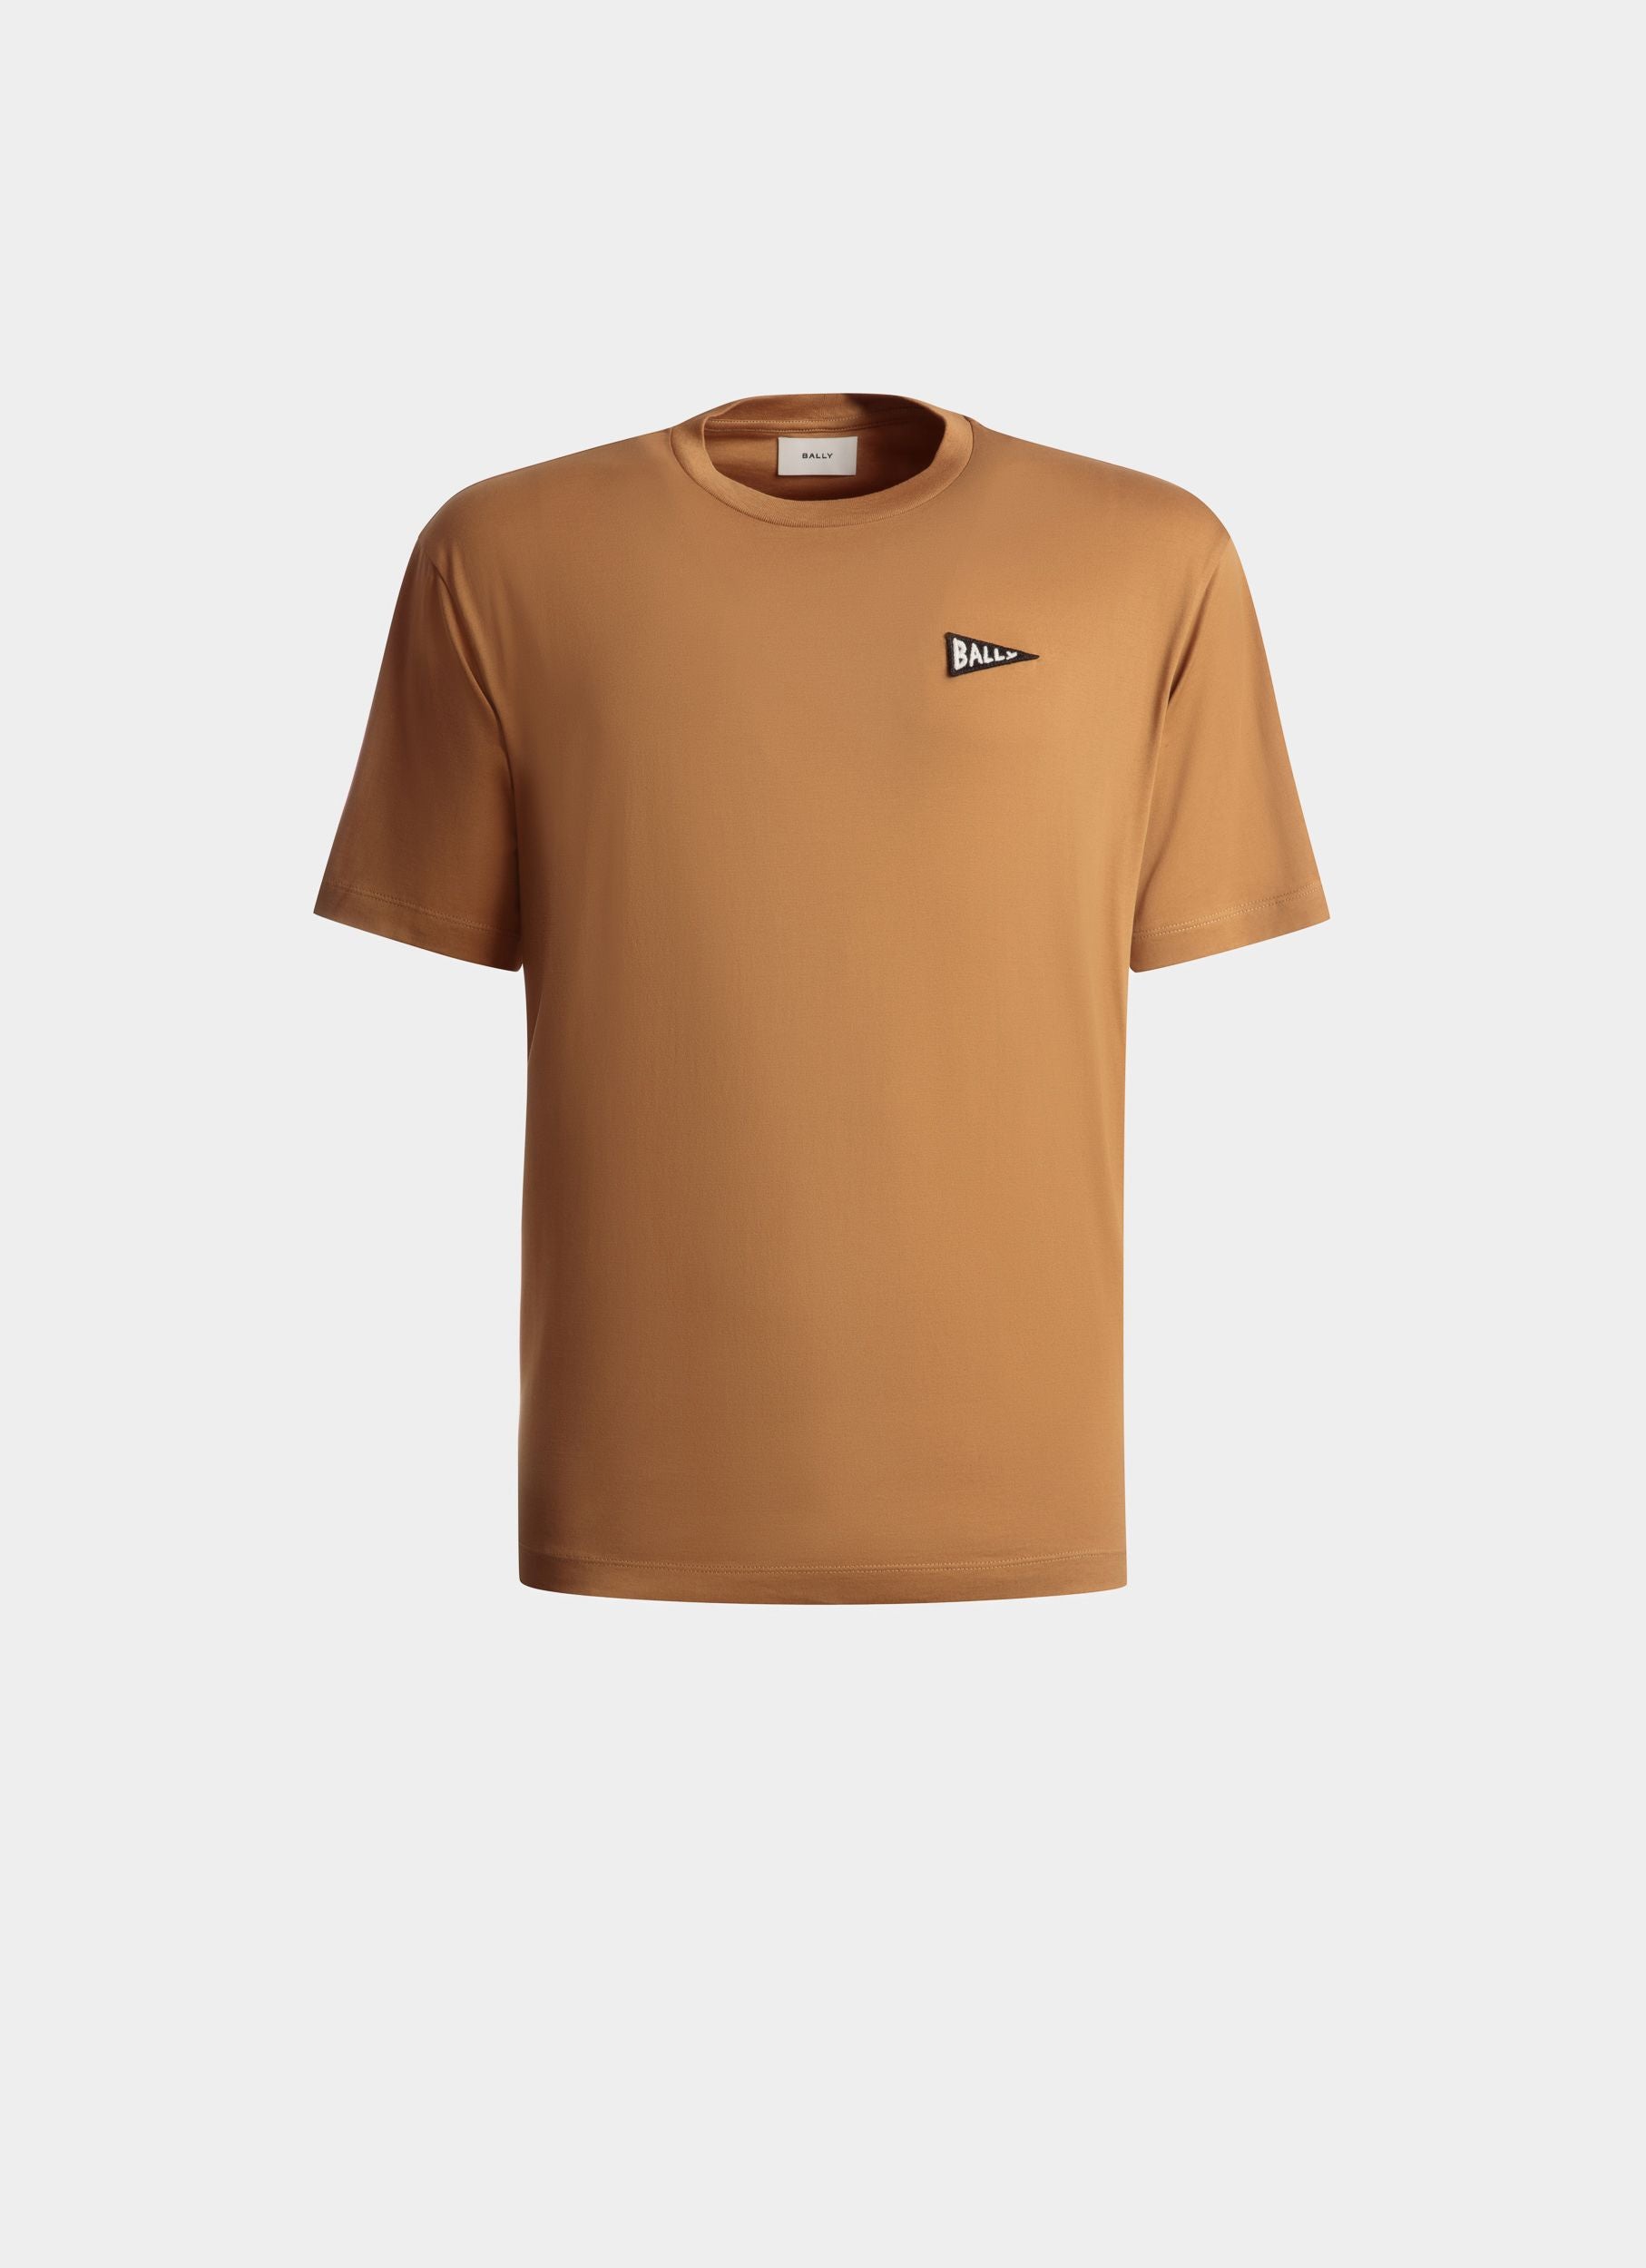 T-shirt | Men's Clothing | Light Brown Cotton Fabric | Bally | Still Life Front